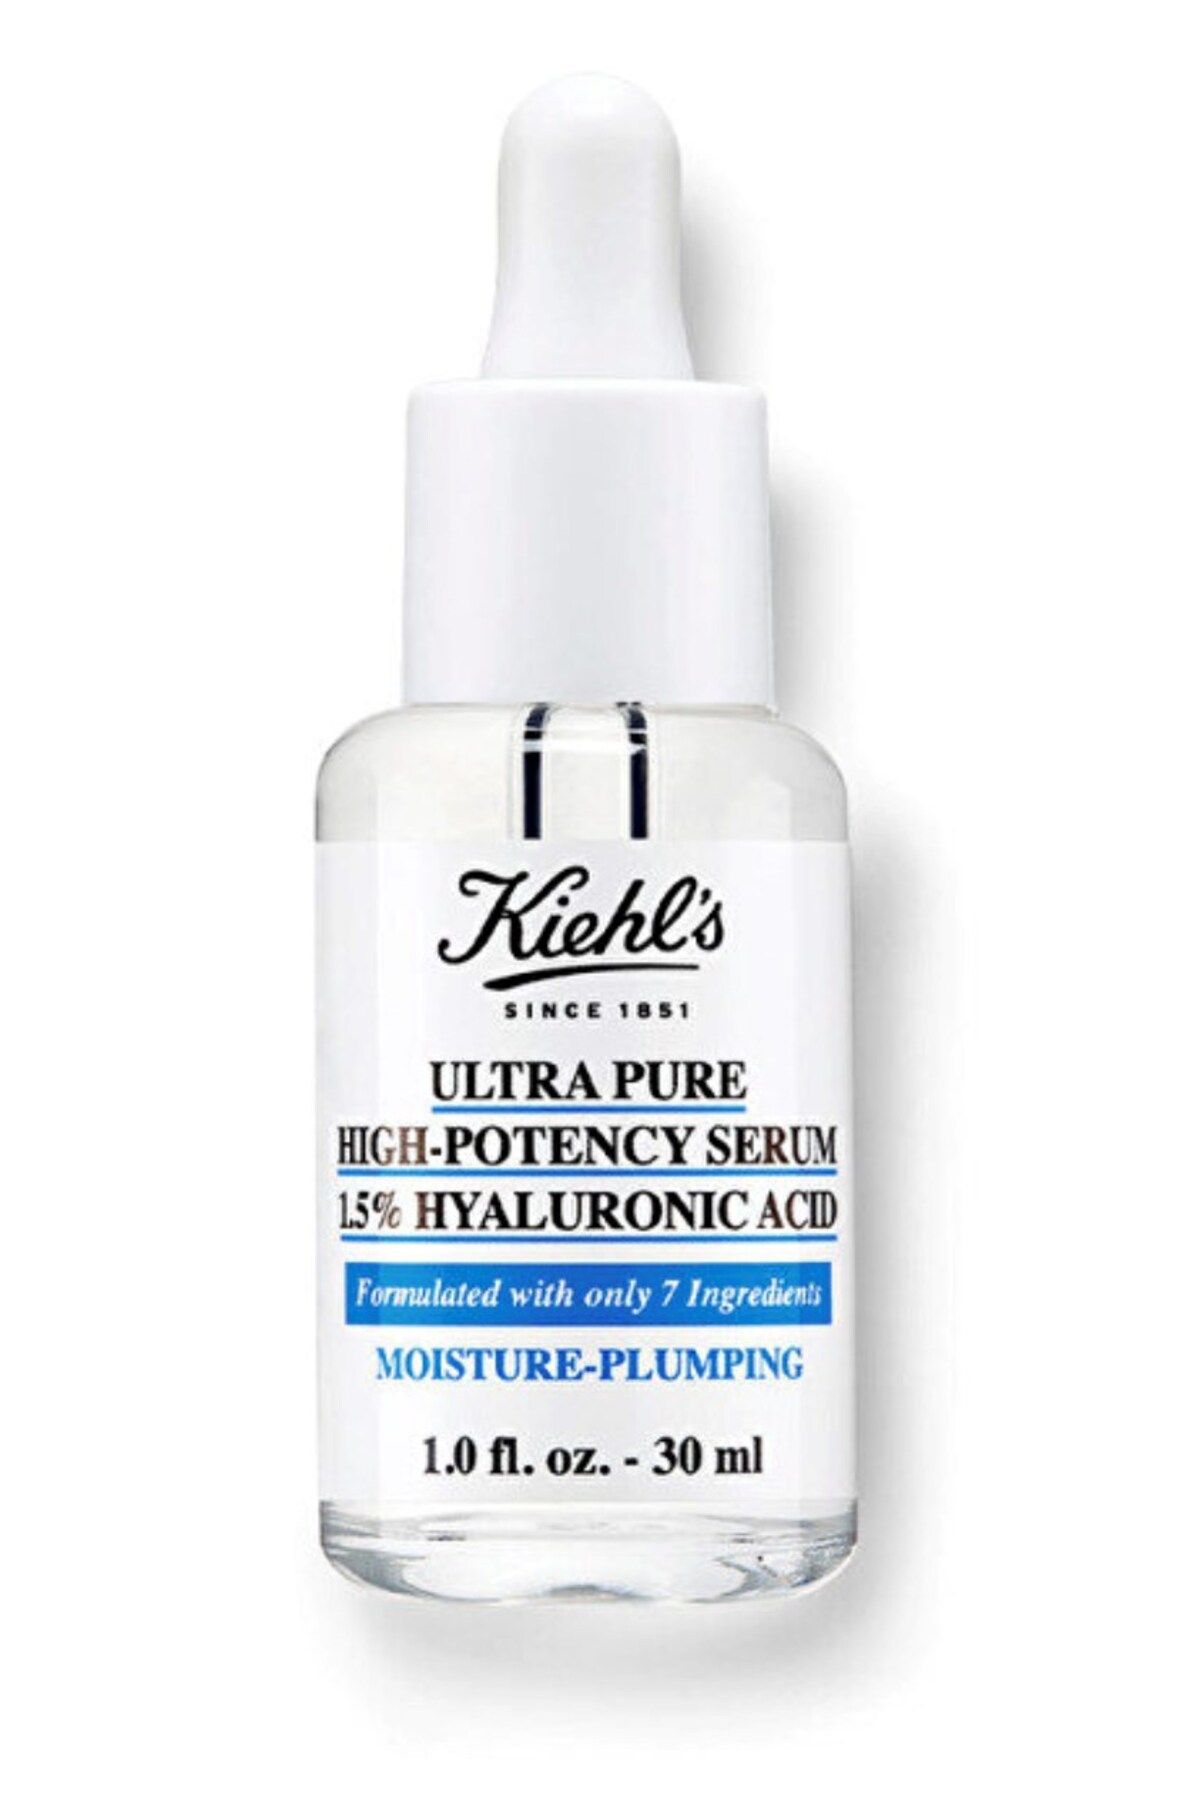 Kiehl's Ultra Pure High-Potency Serum 1.5% Hyaluronic Acid 30 ML